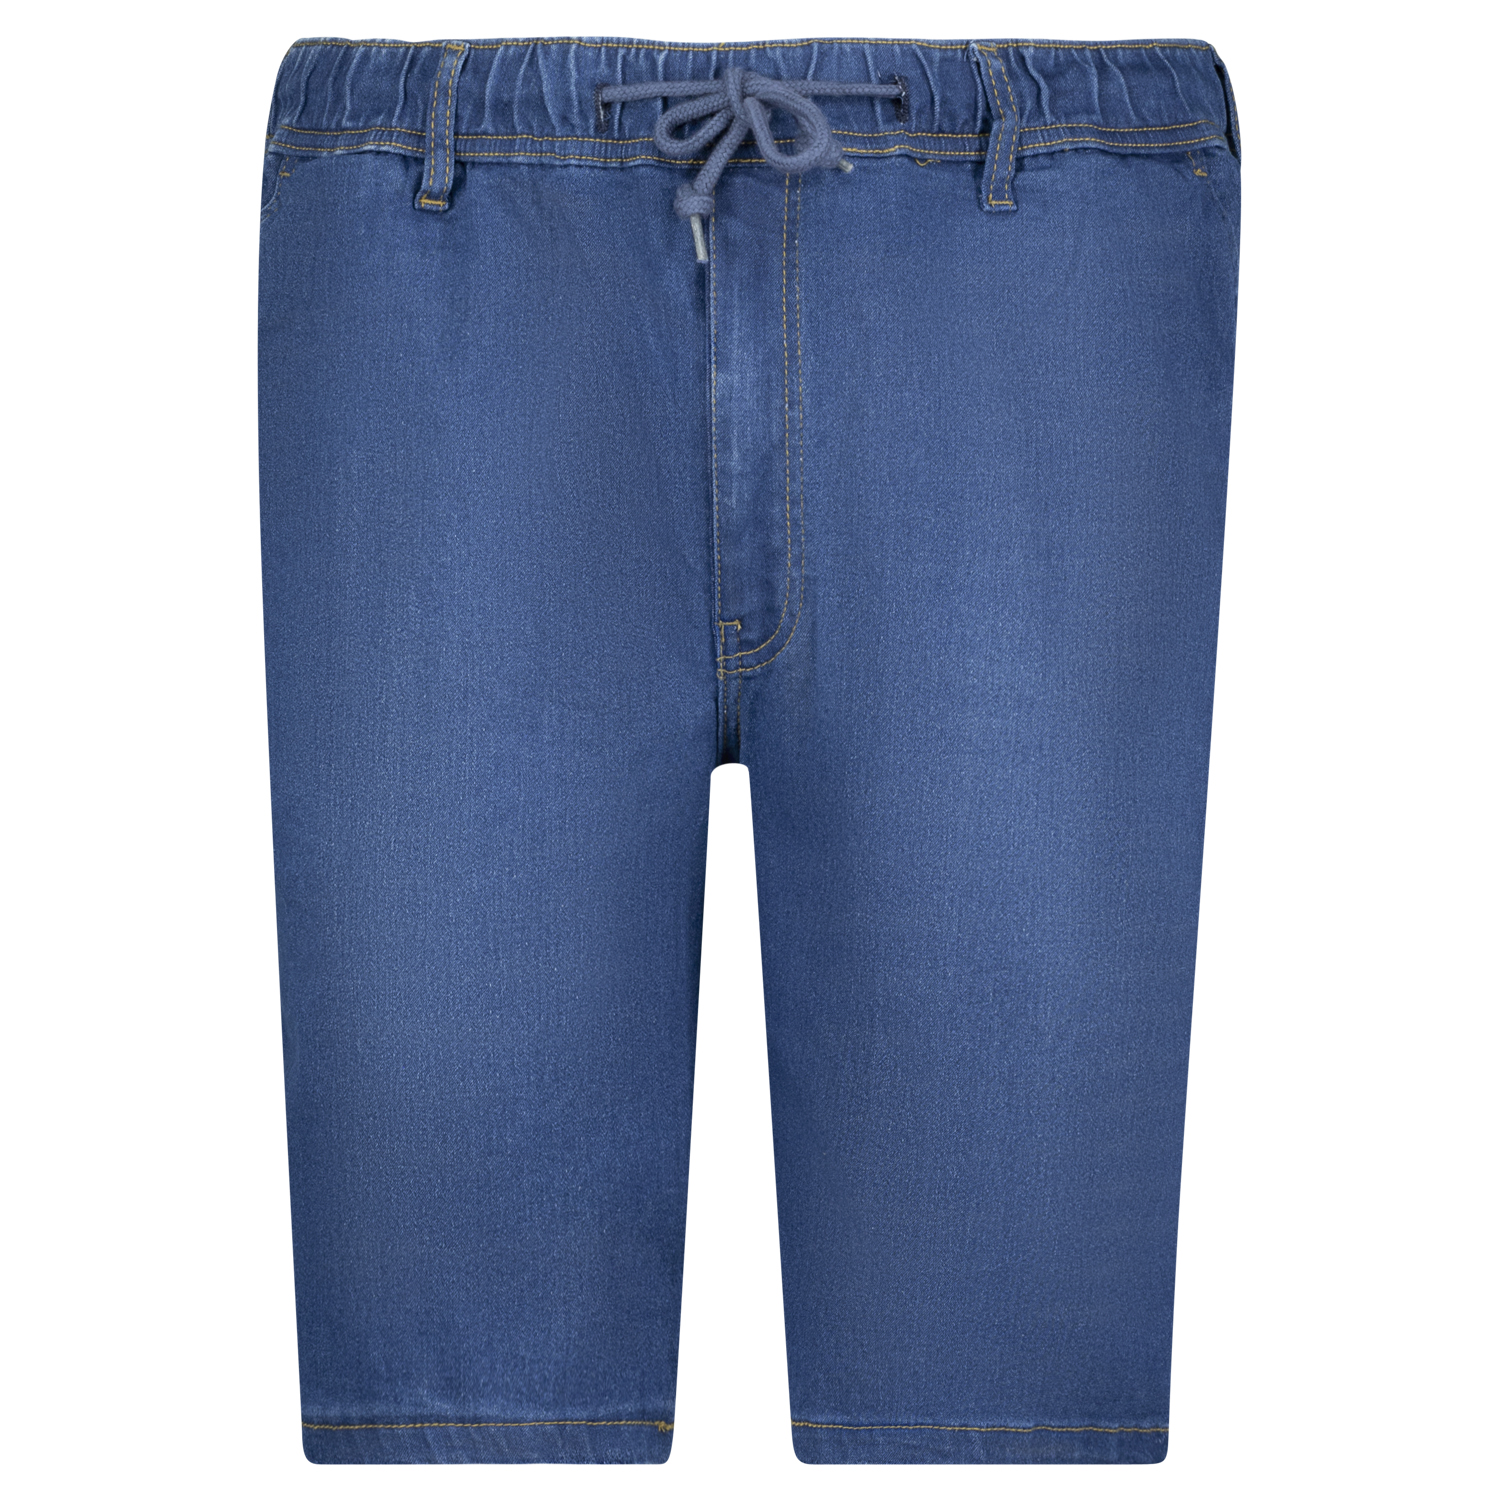 Jogging jeans short "KANSAS" bleu moyen by Adamo grandes tailles jusqu'au 12XL